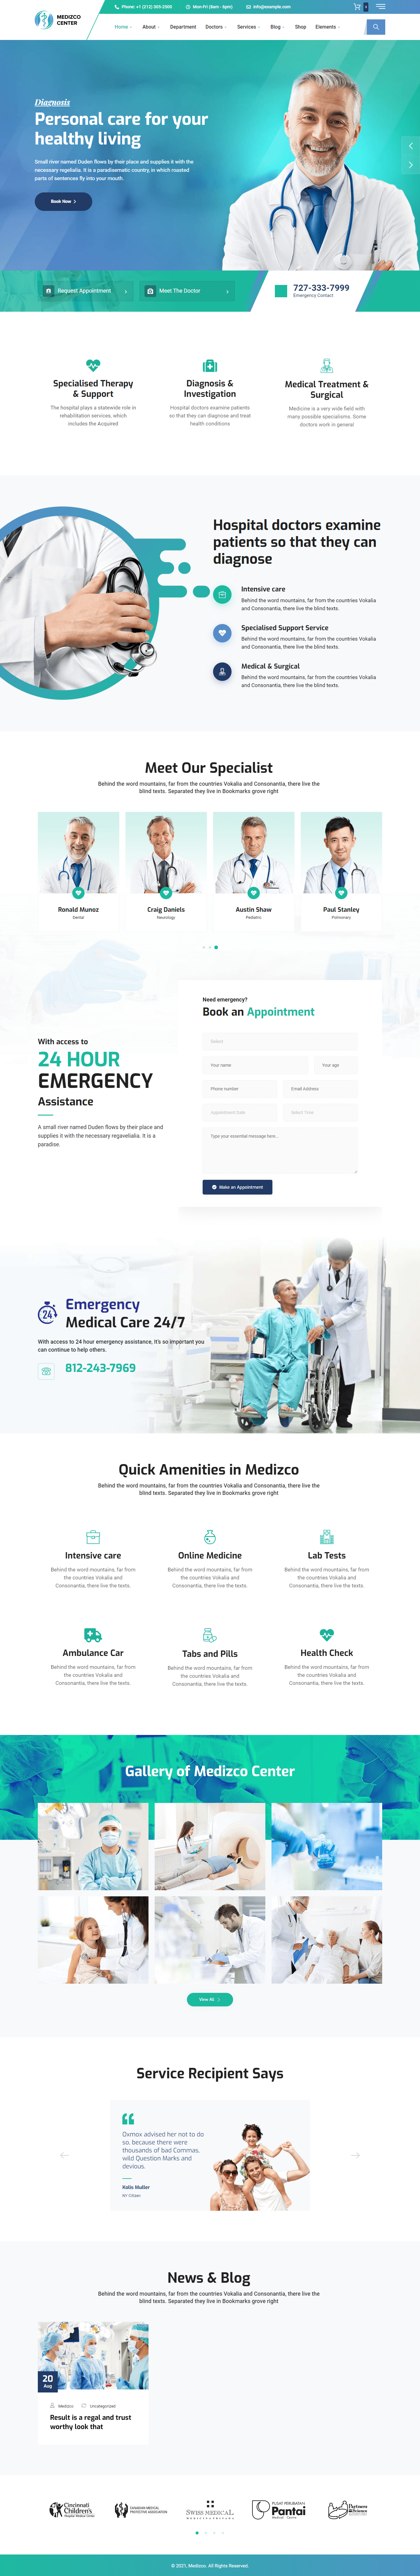 medizco medical site